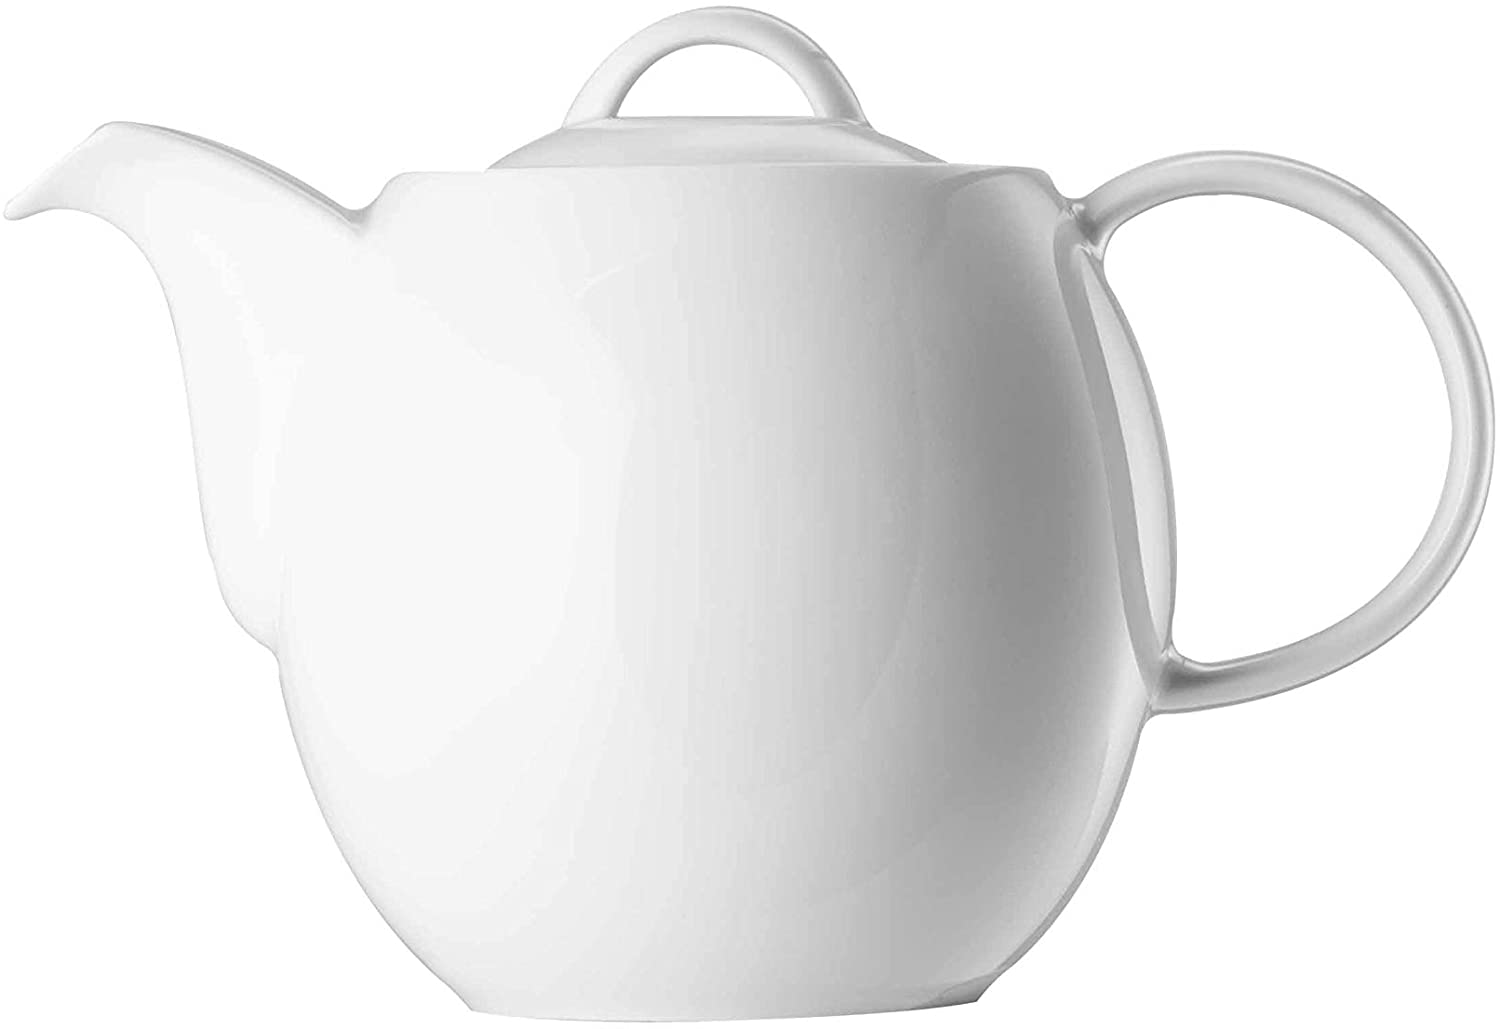 Rosenthal Thomas Sunny Day Teapot with Lid, Coffee Pot, Porcelain, White, 900 ml, 14240